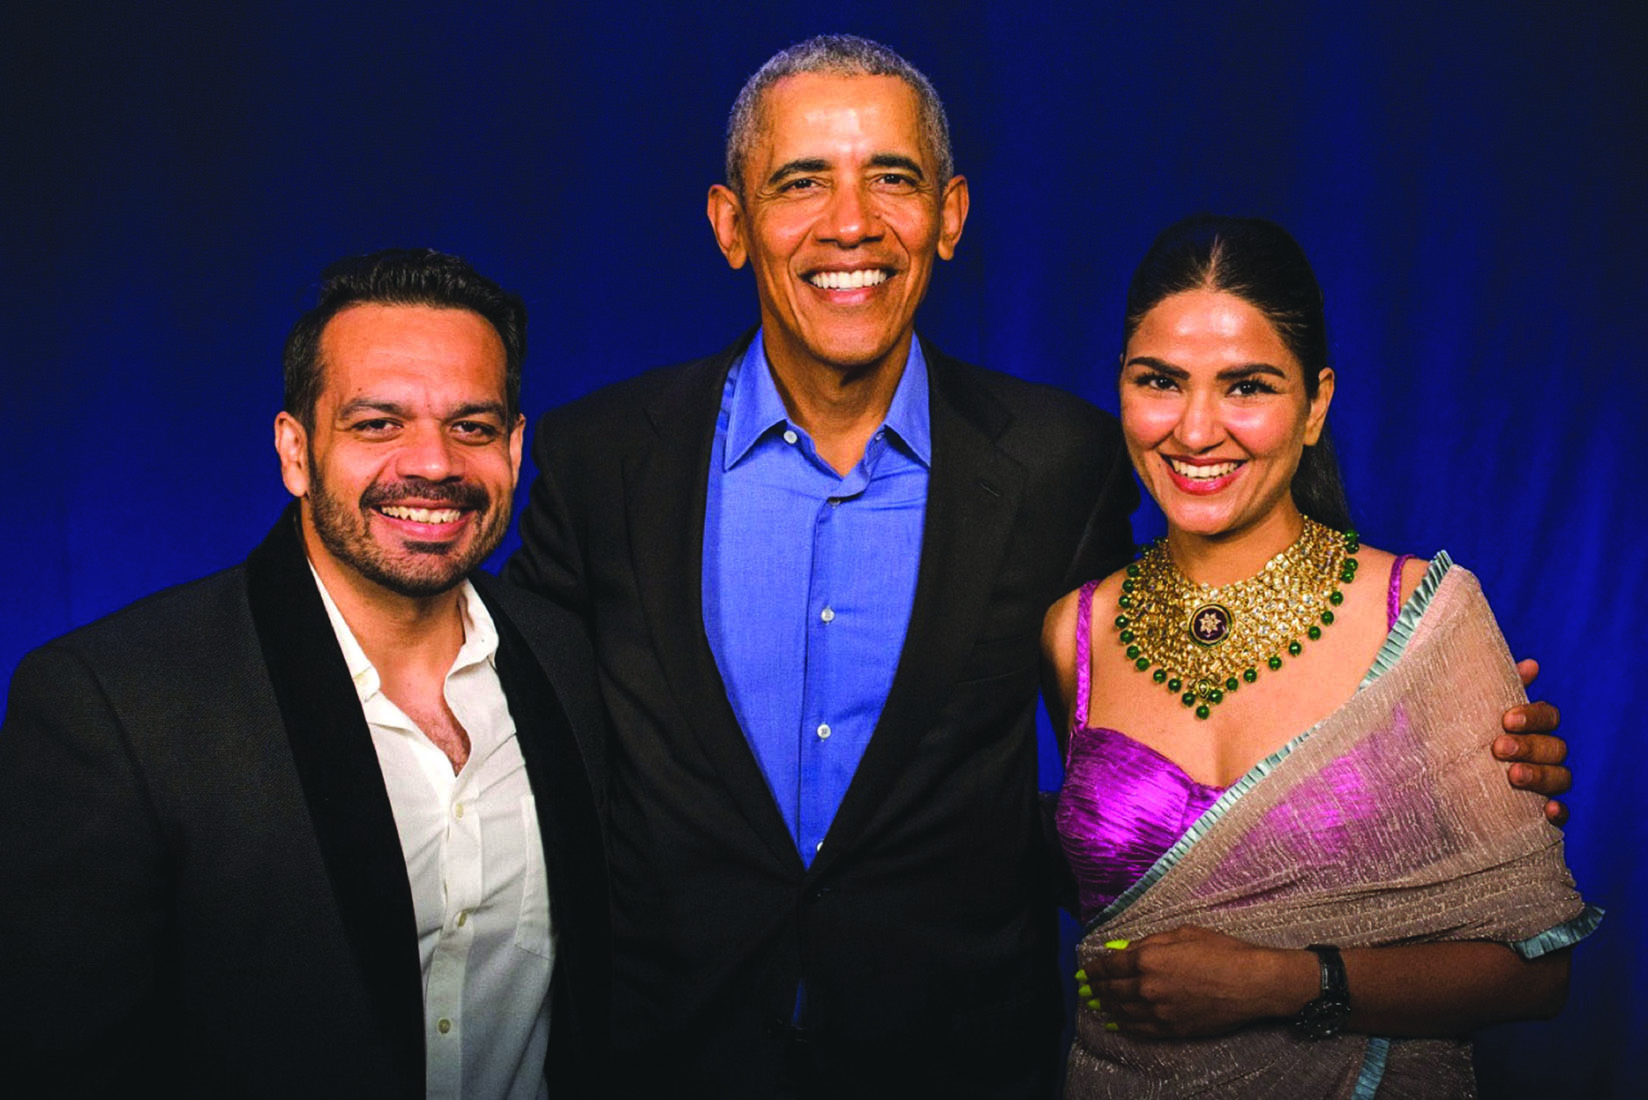 Gaurav Taneja and Ritu Rathee with Barack Obama